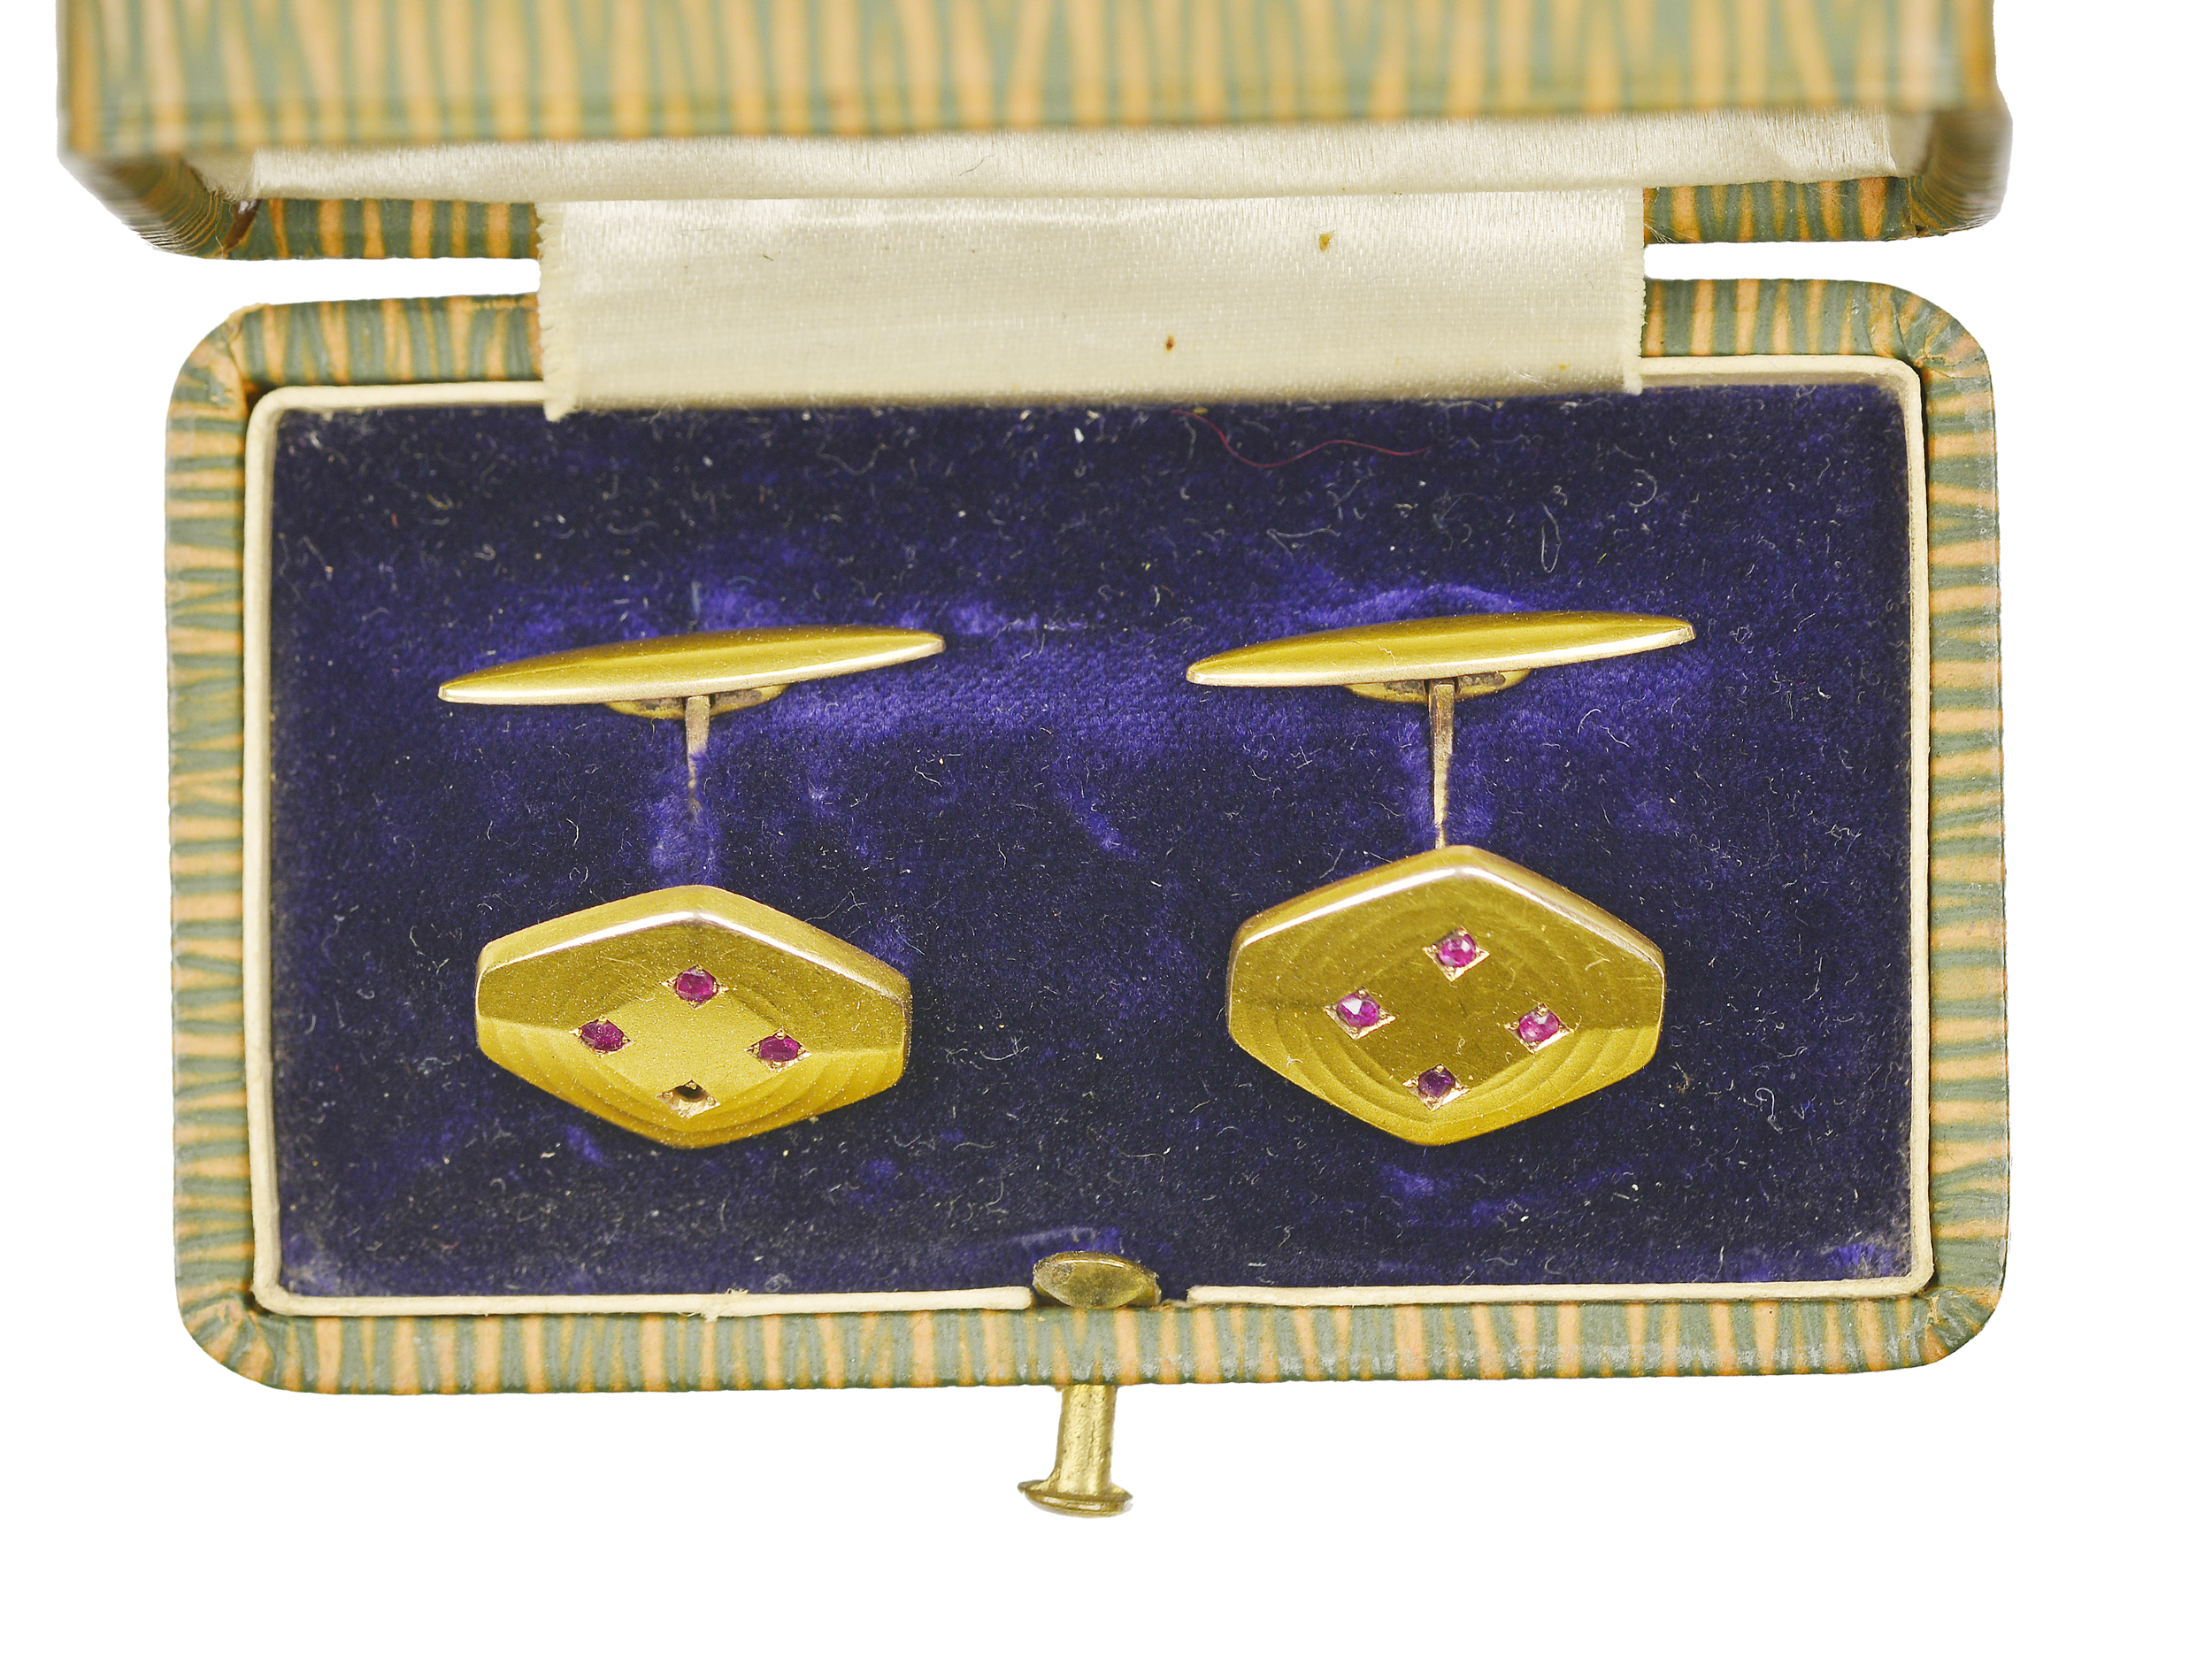 Pair of cufflinks, Art Nouveau, around 1900 - Image 2 of 3